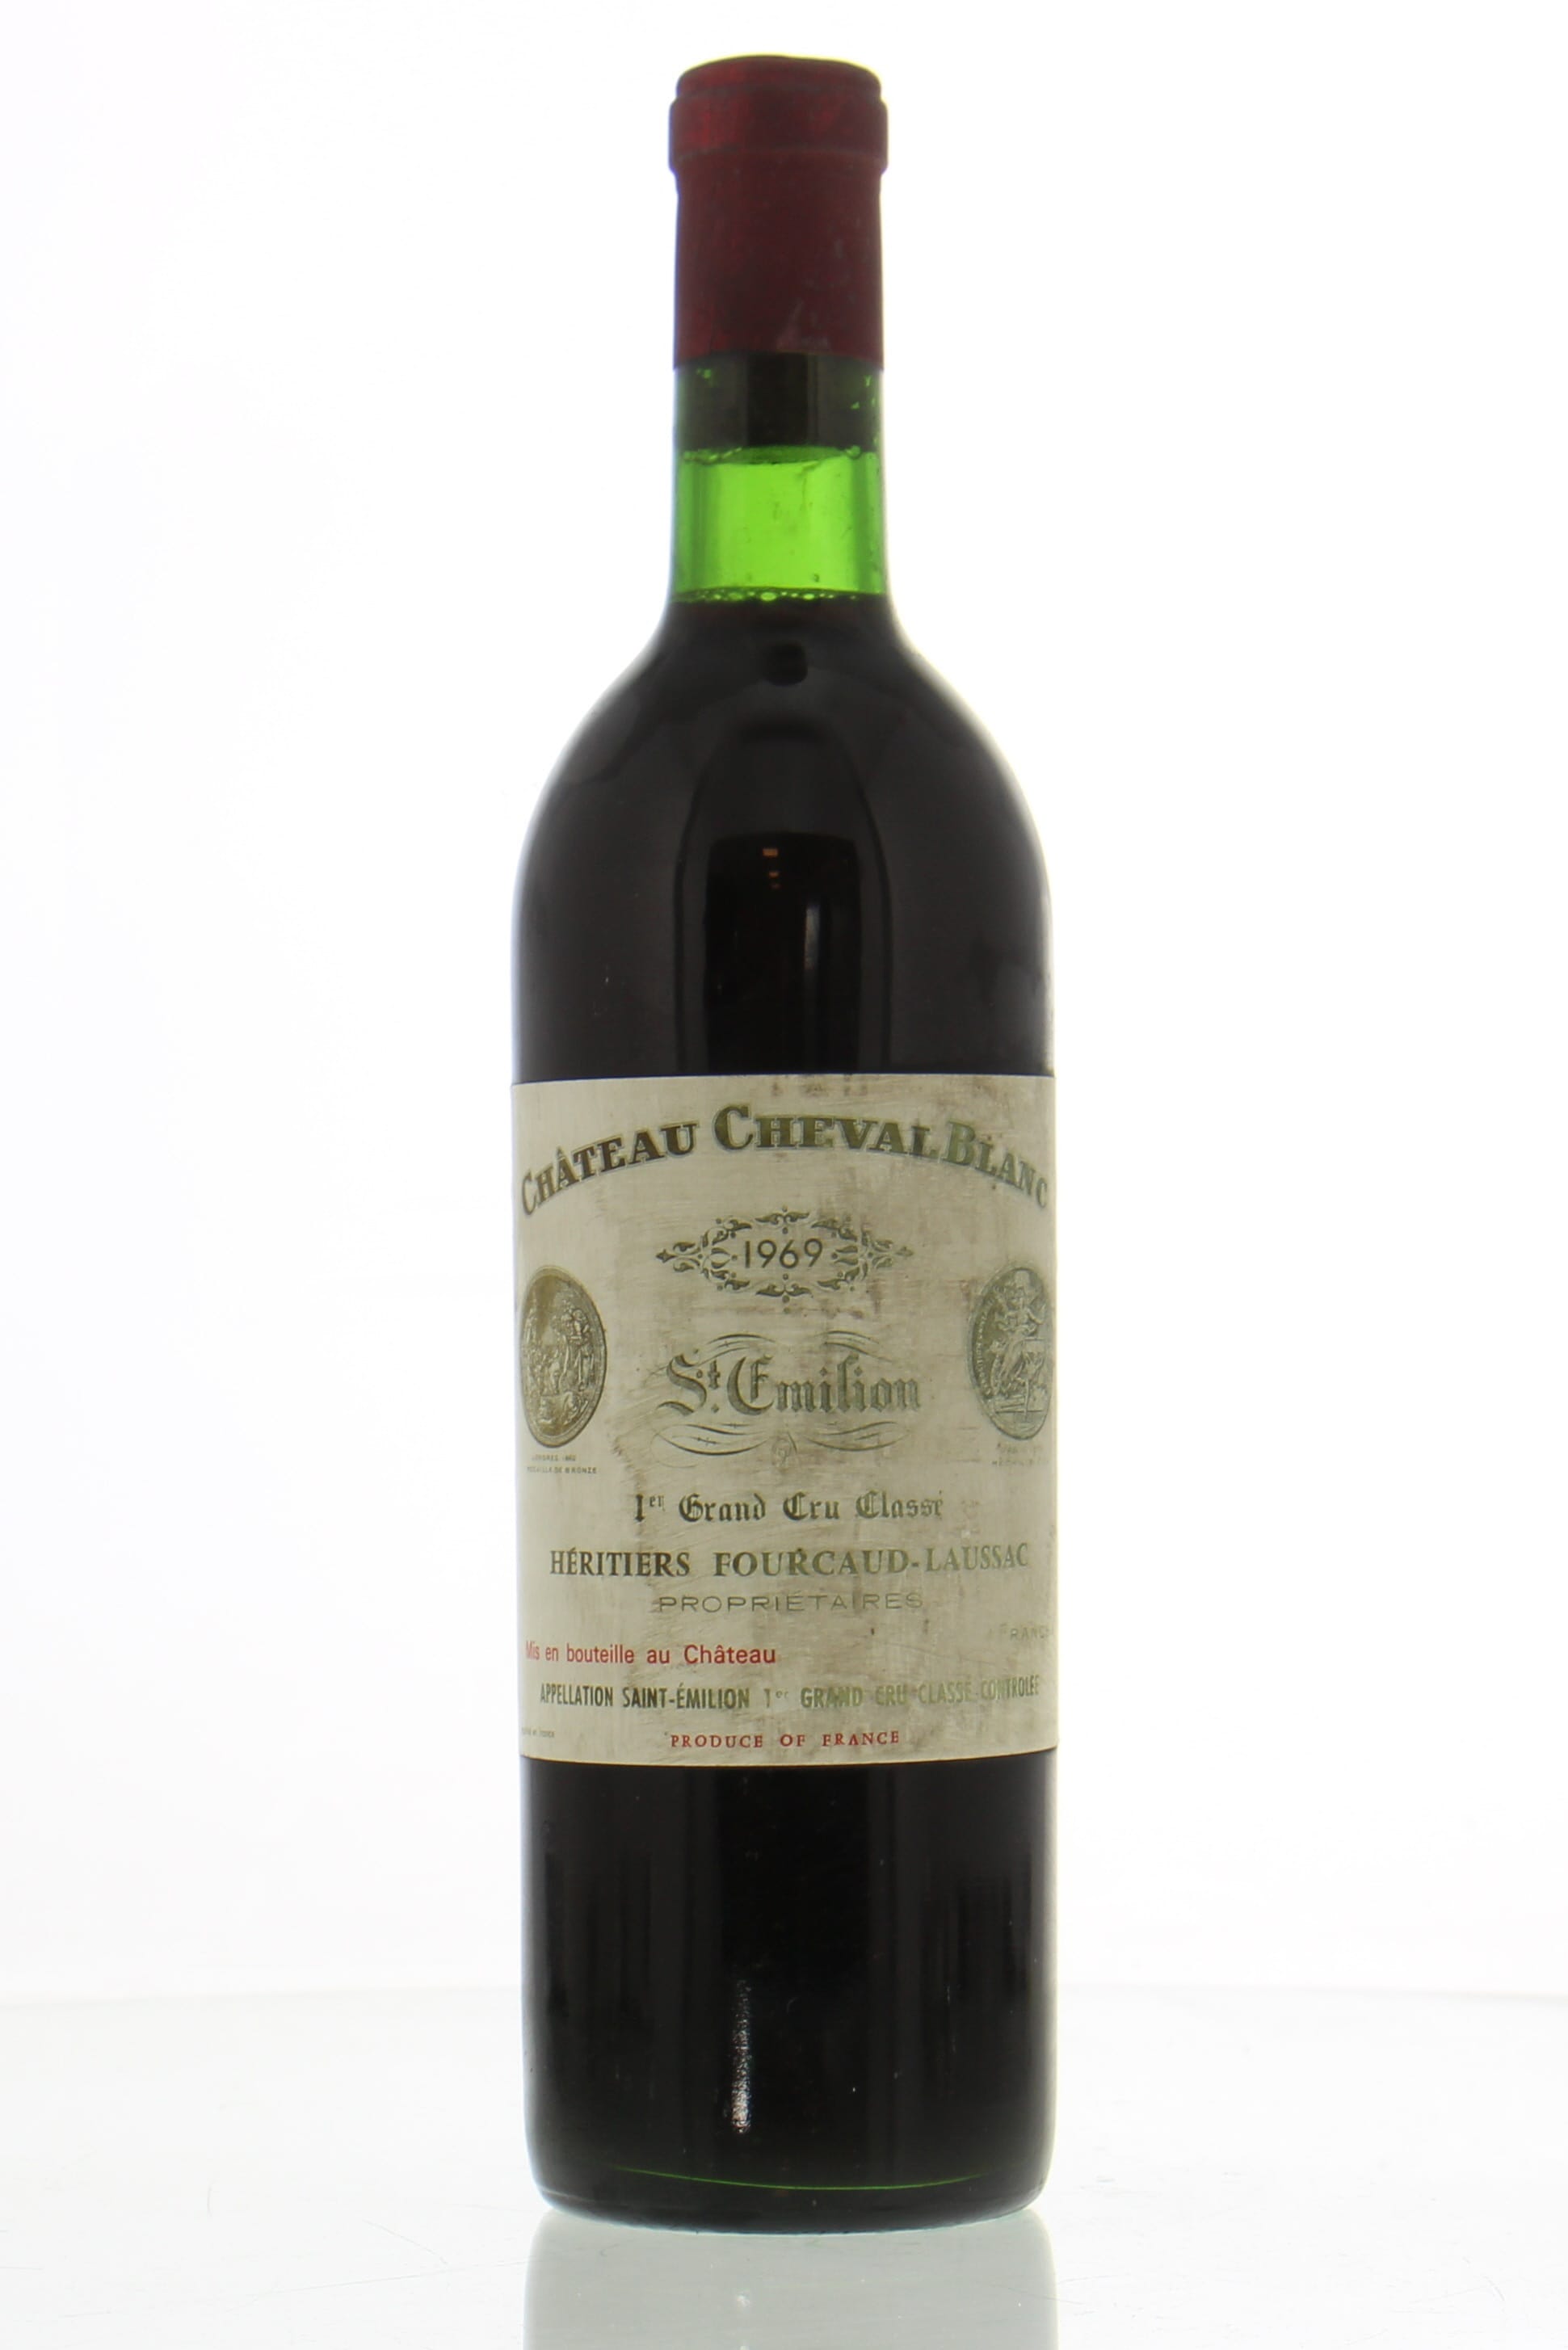 Chateau Cheval Blanc - Chateau Cheval Blanc 1969 Perfect